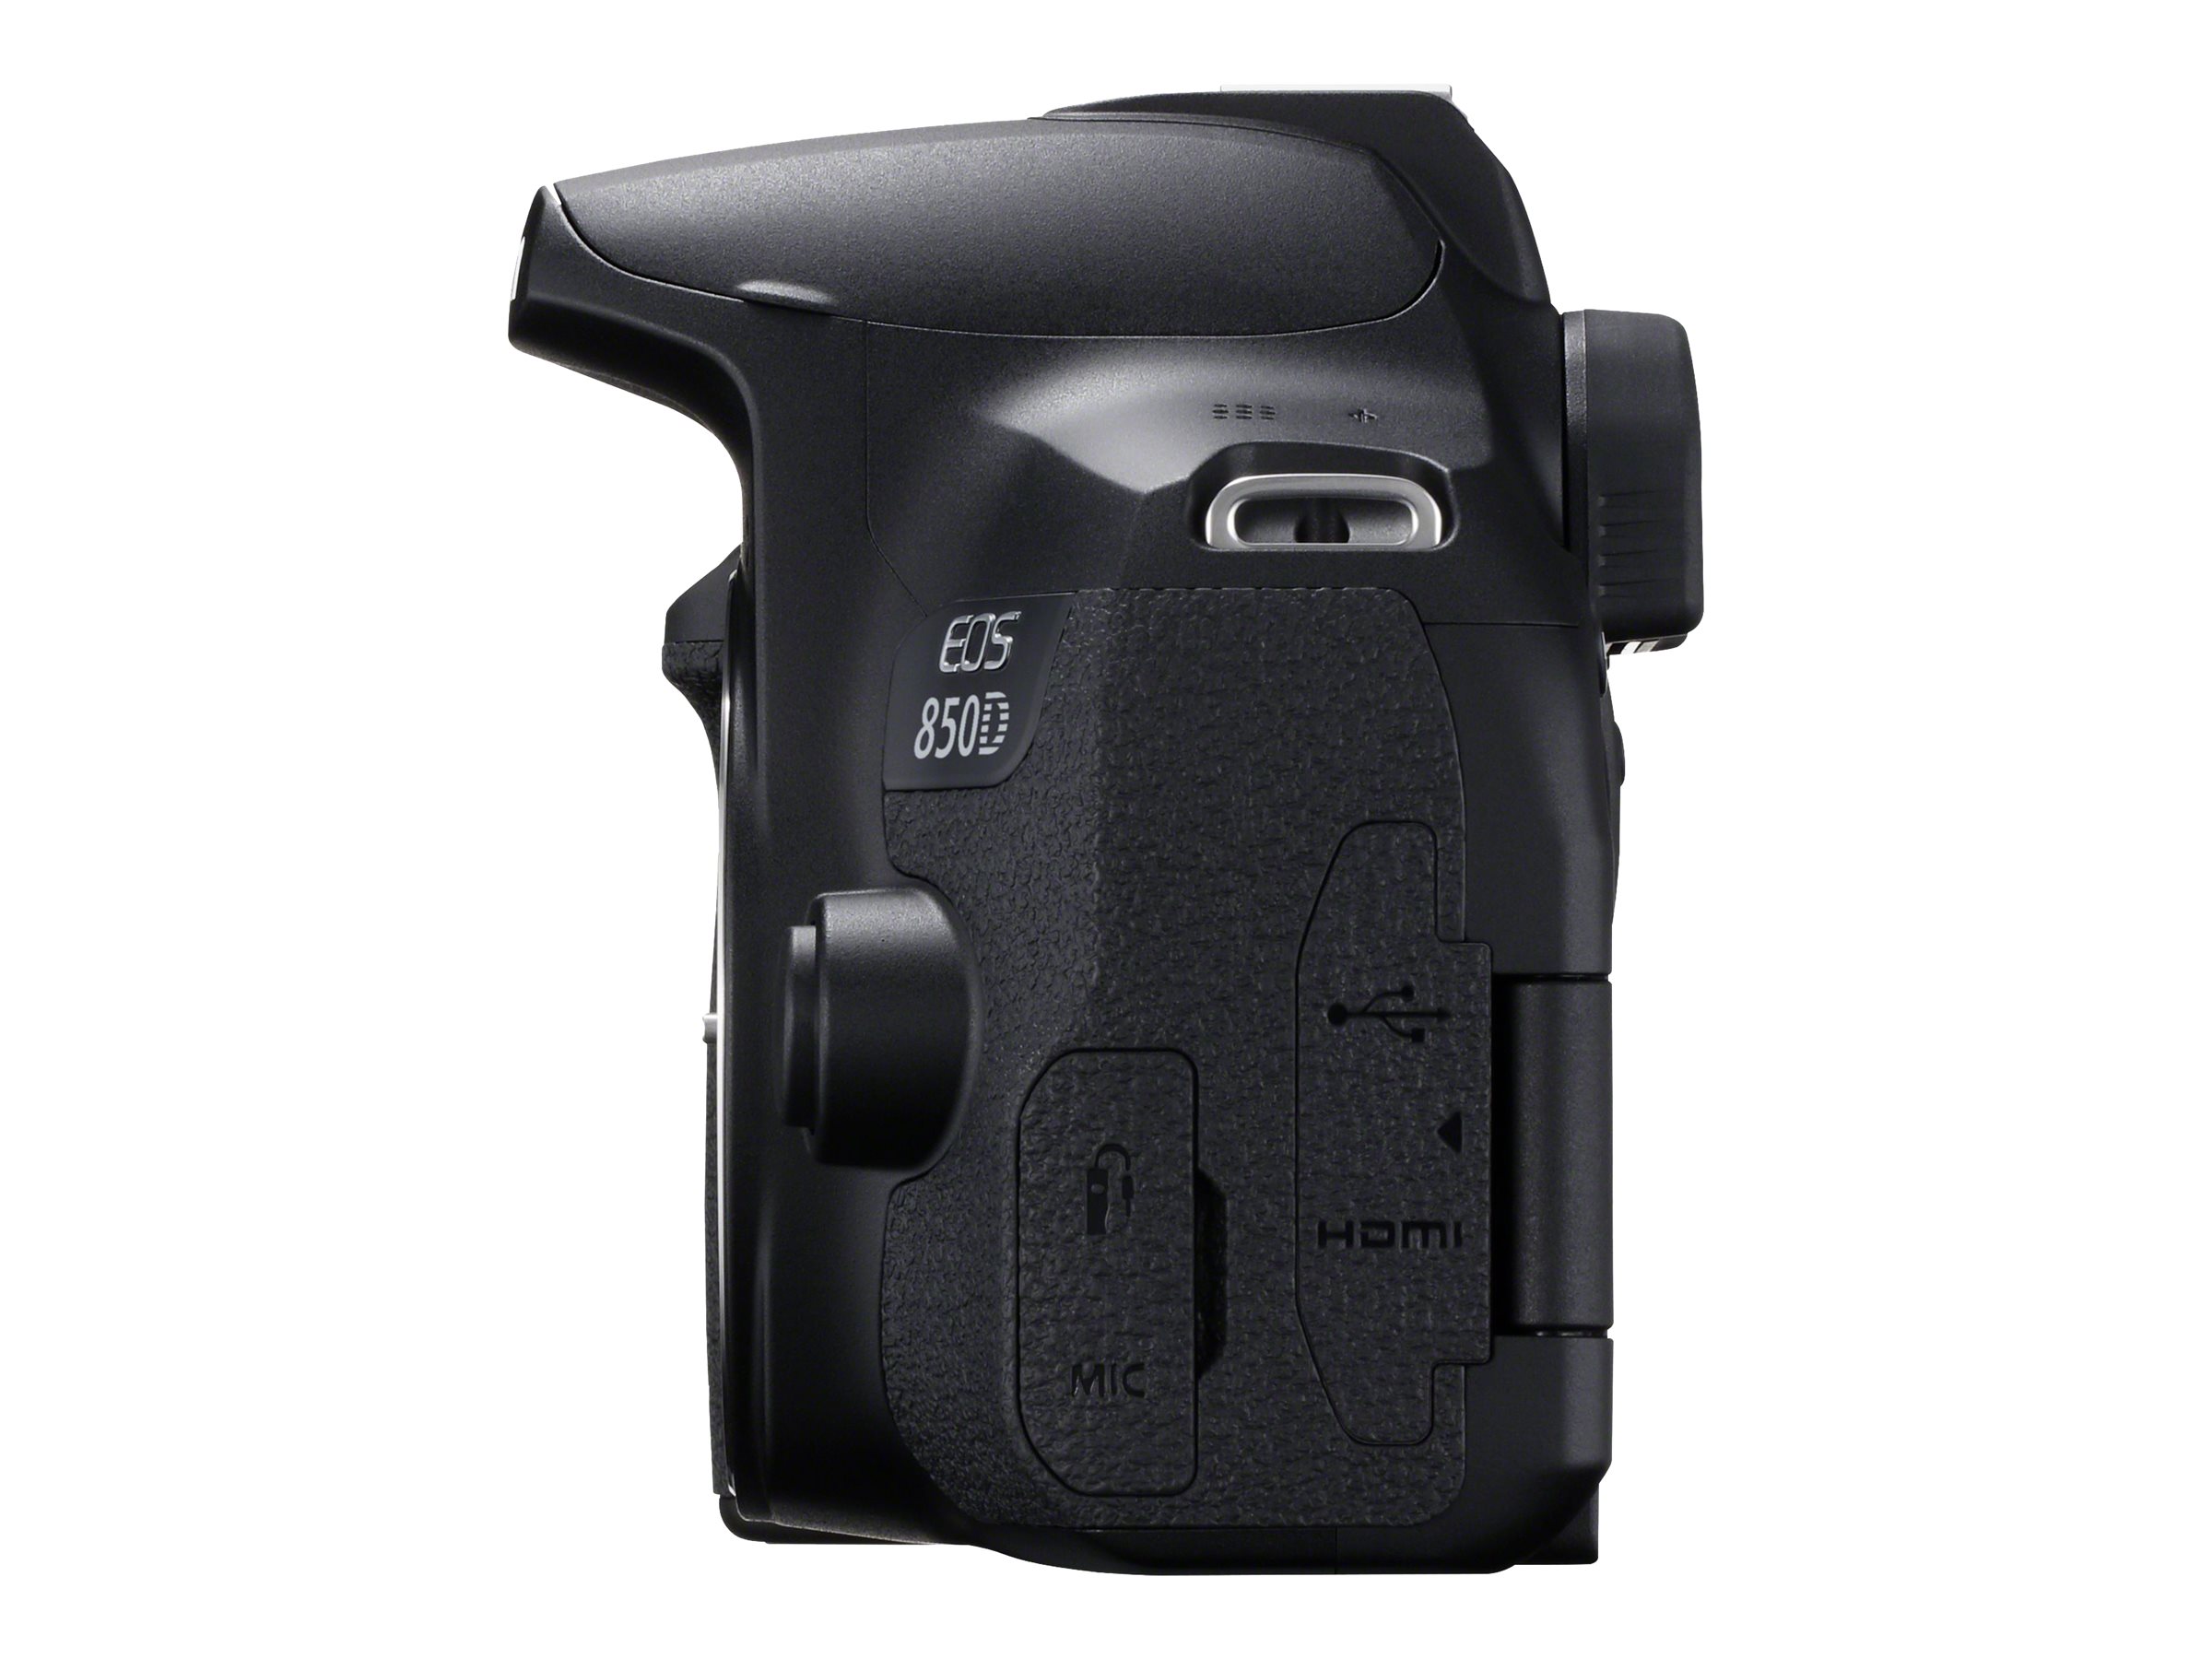 Canon EOS 850D - Digitalkamera - SLR - 24.1 MPix